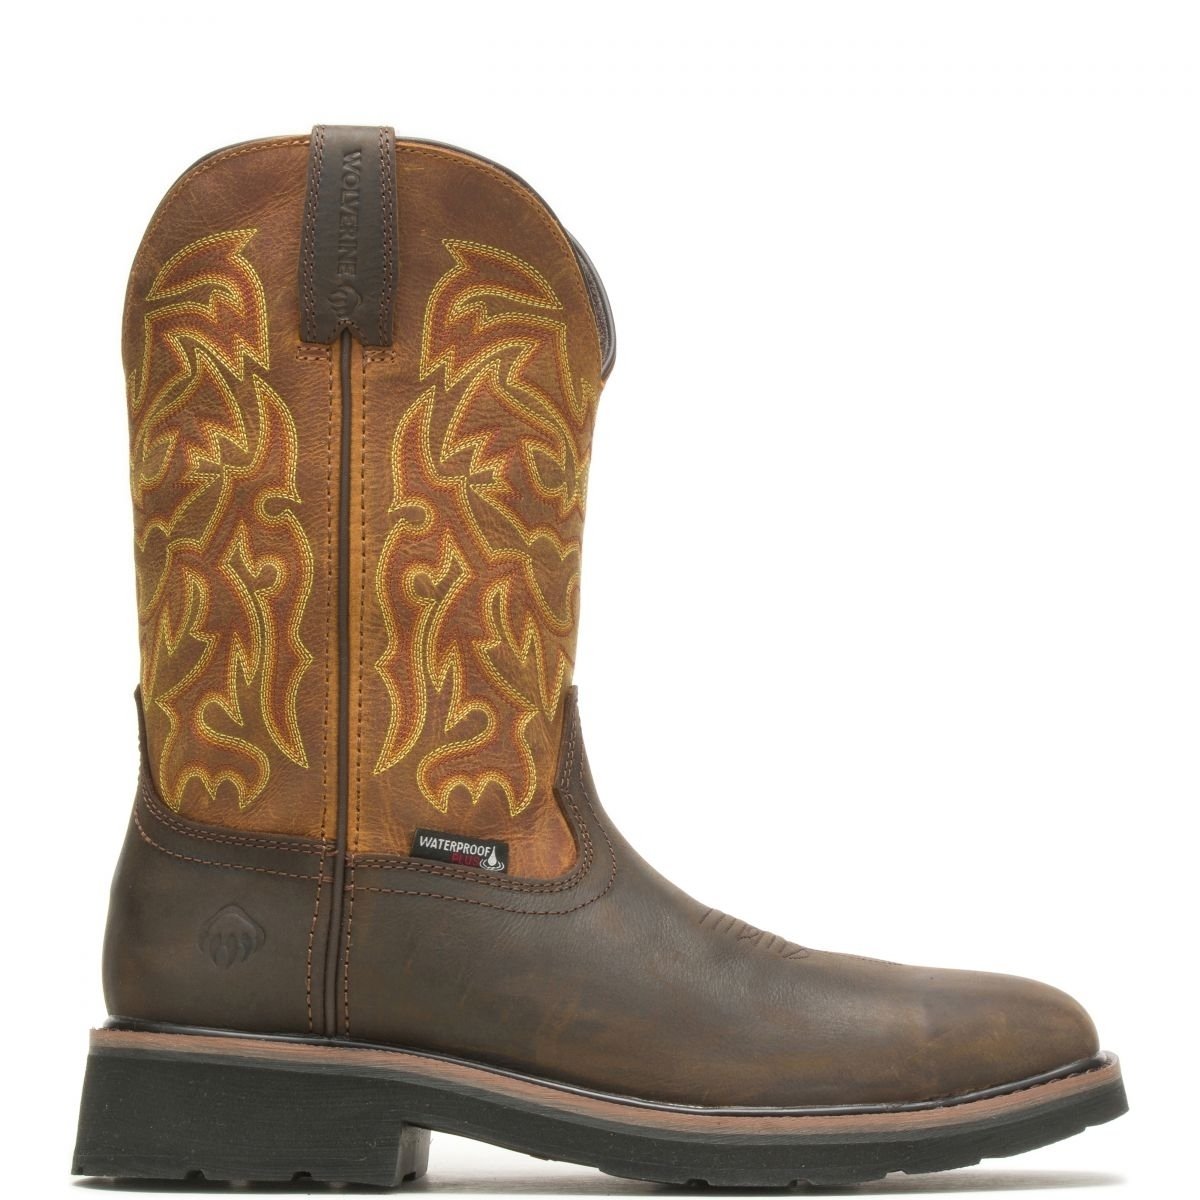 WOLVERINE Men's Rancher 10 Steel Toe Waterproof Work Boot Golden/Brown - W221029 GOLDEN/BROWN - GOLDEN/BROWN, 8.5-M